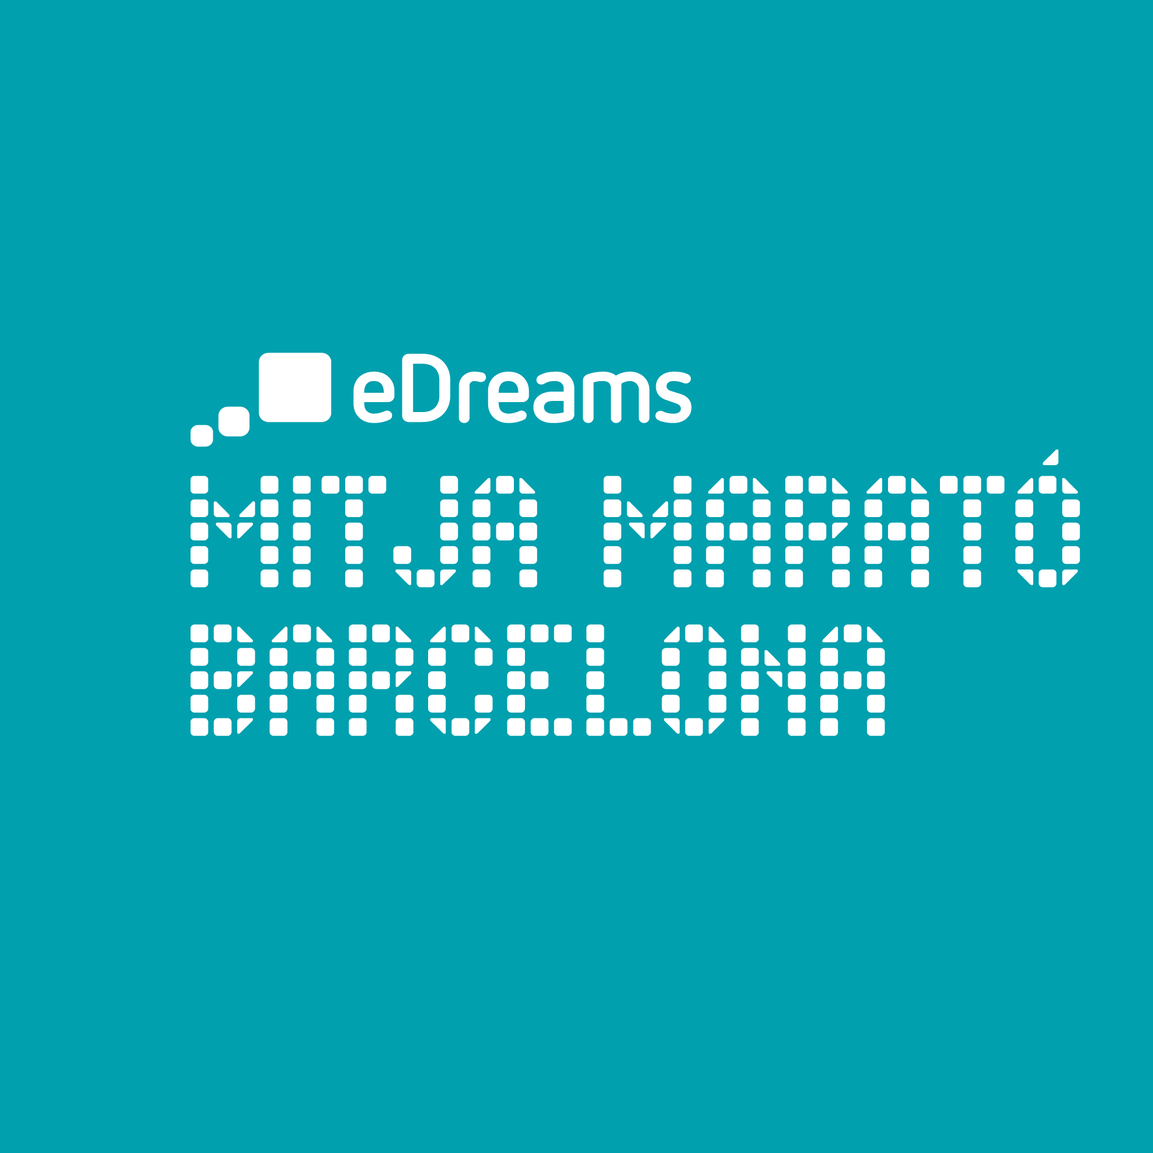 eDreams Barcelona Half Marathon logo on RaceRaves